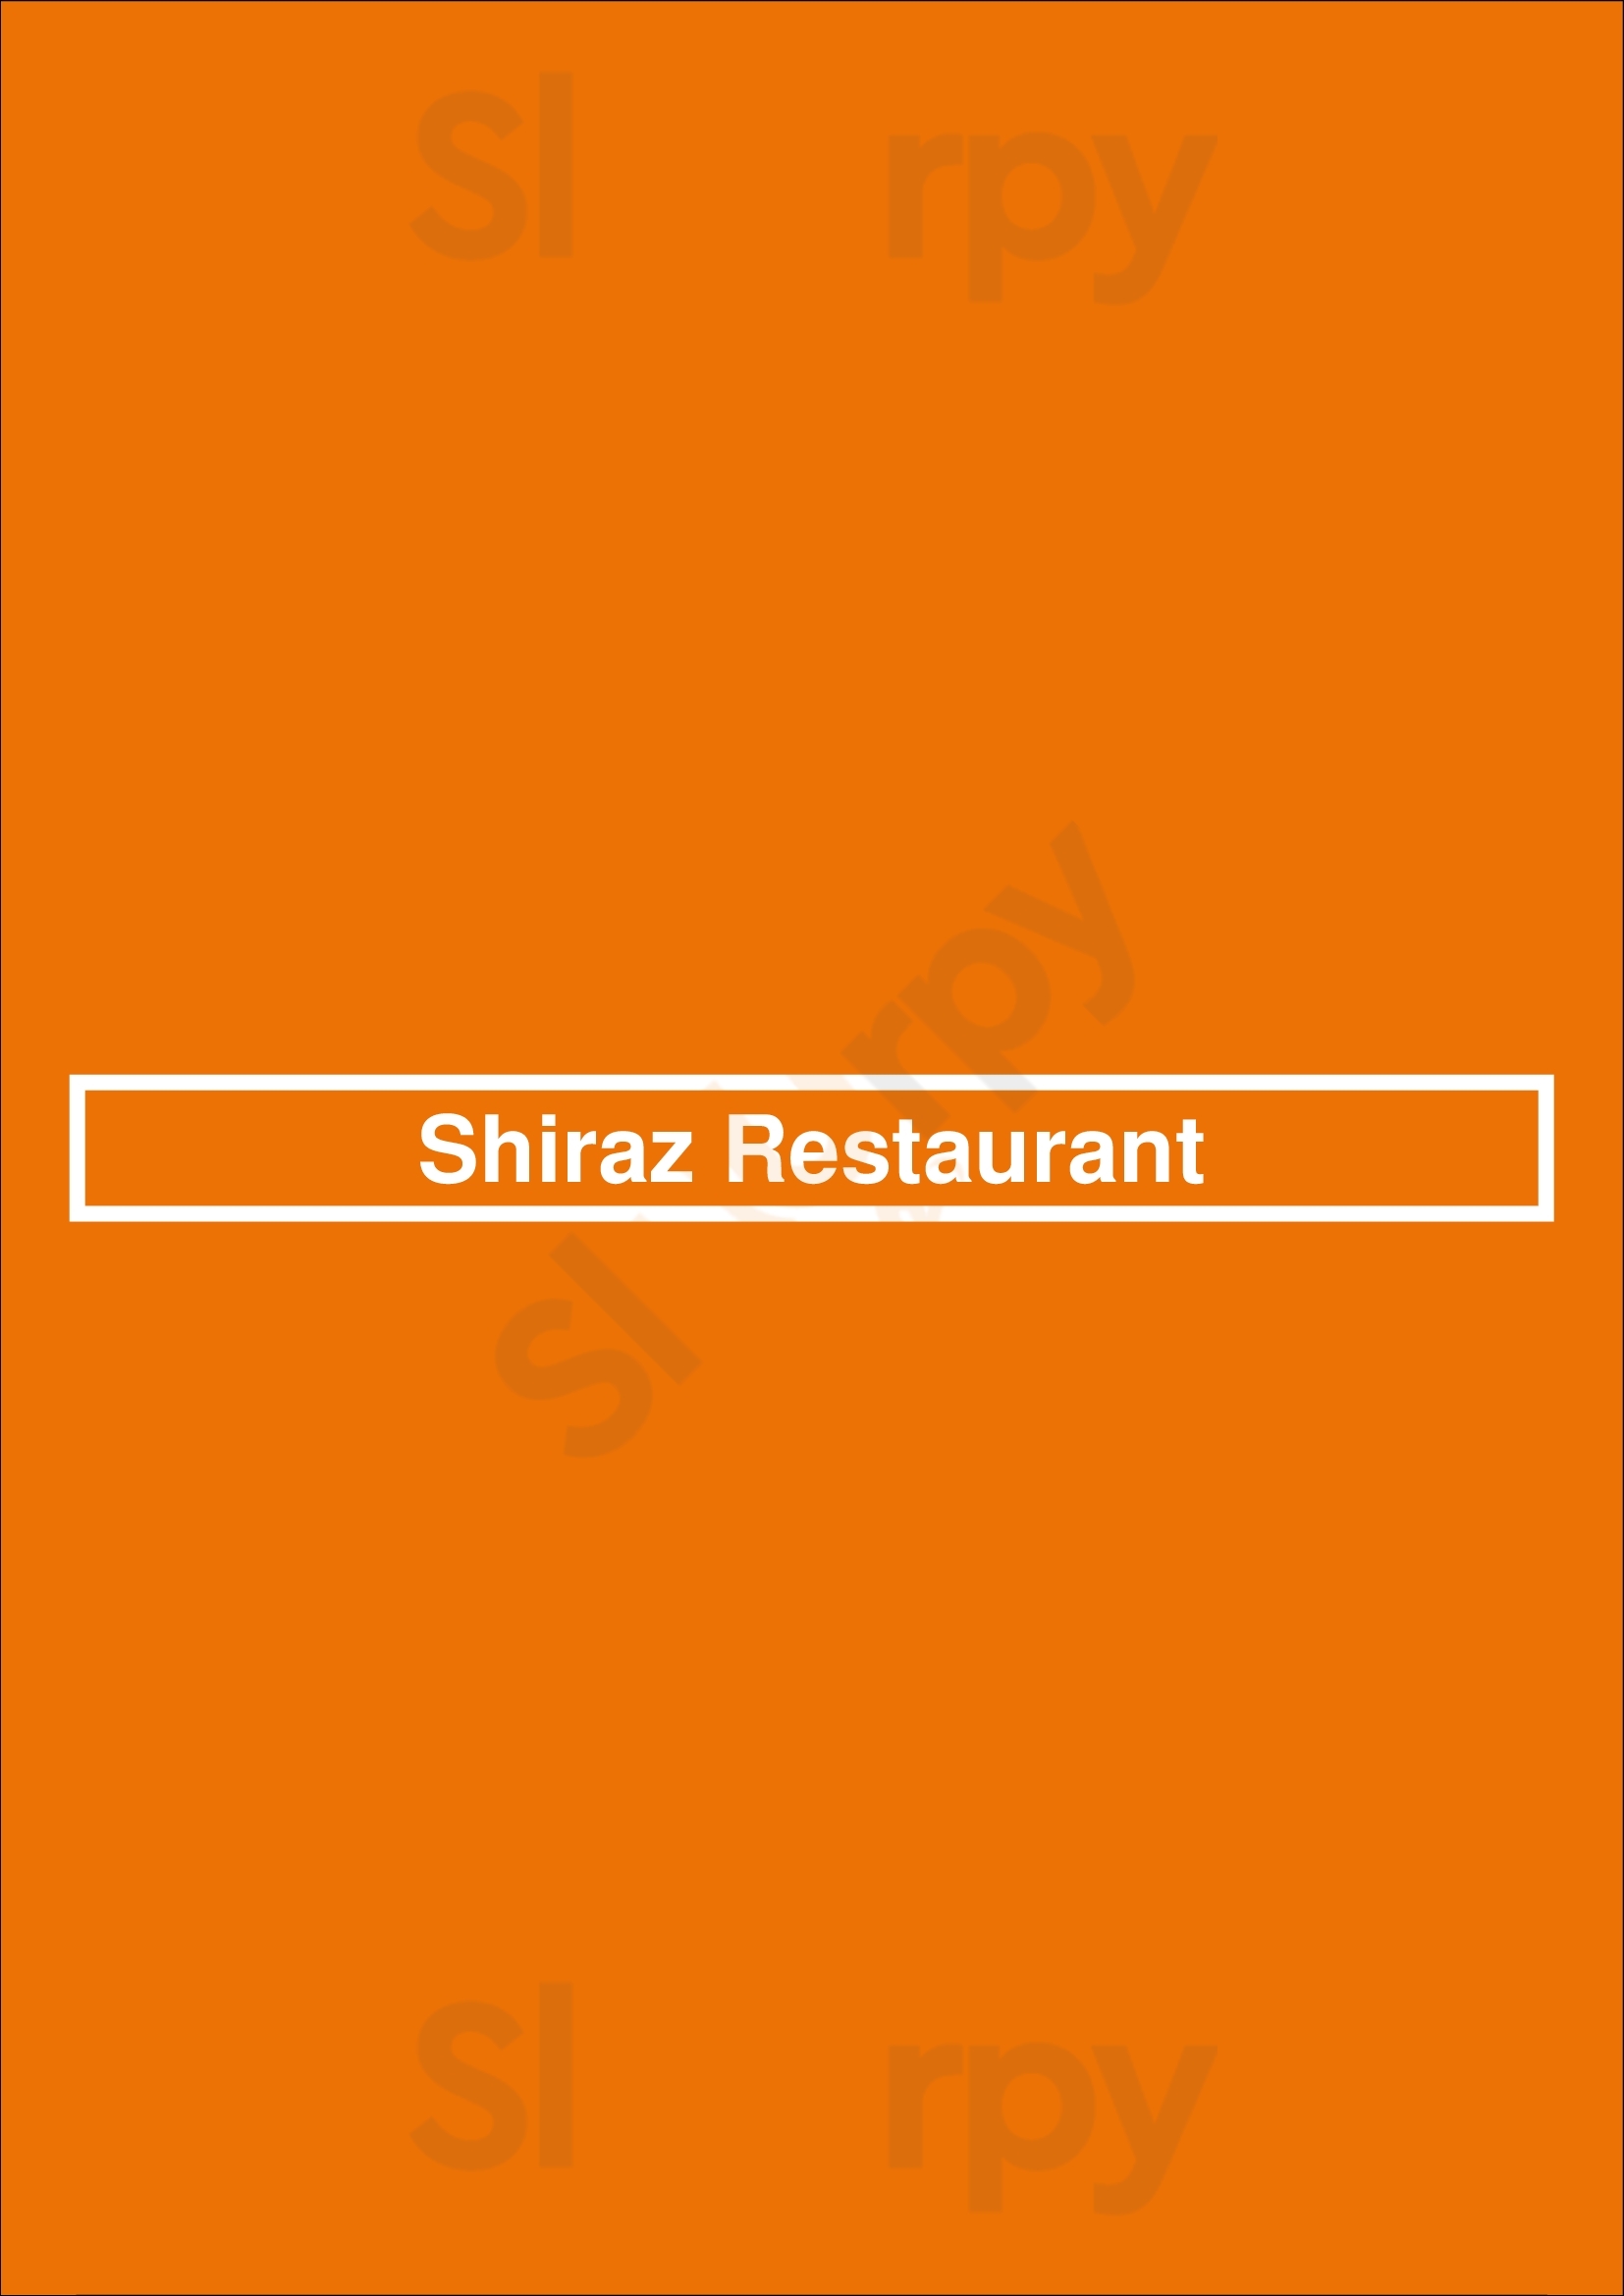 Shiraz Restaurant Las Vegas Menu - 1